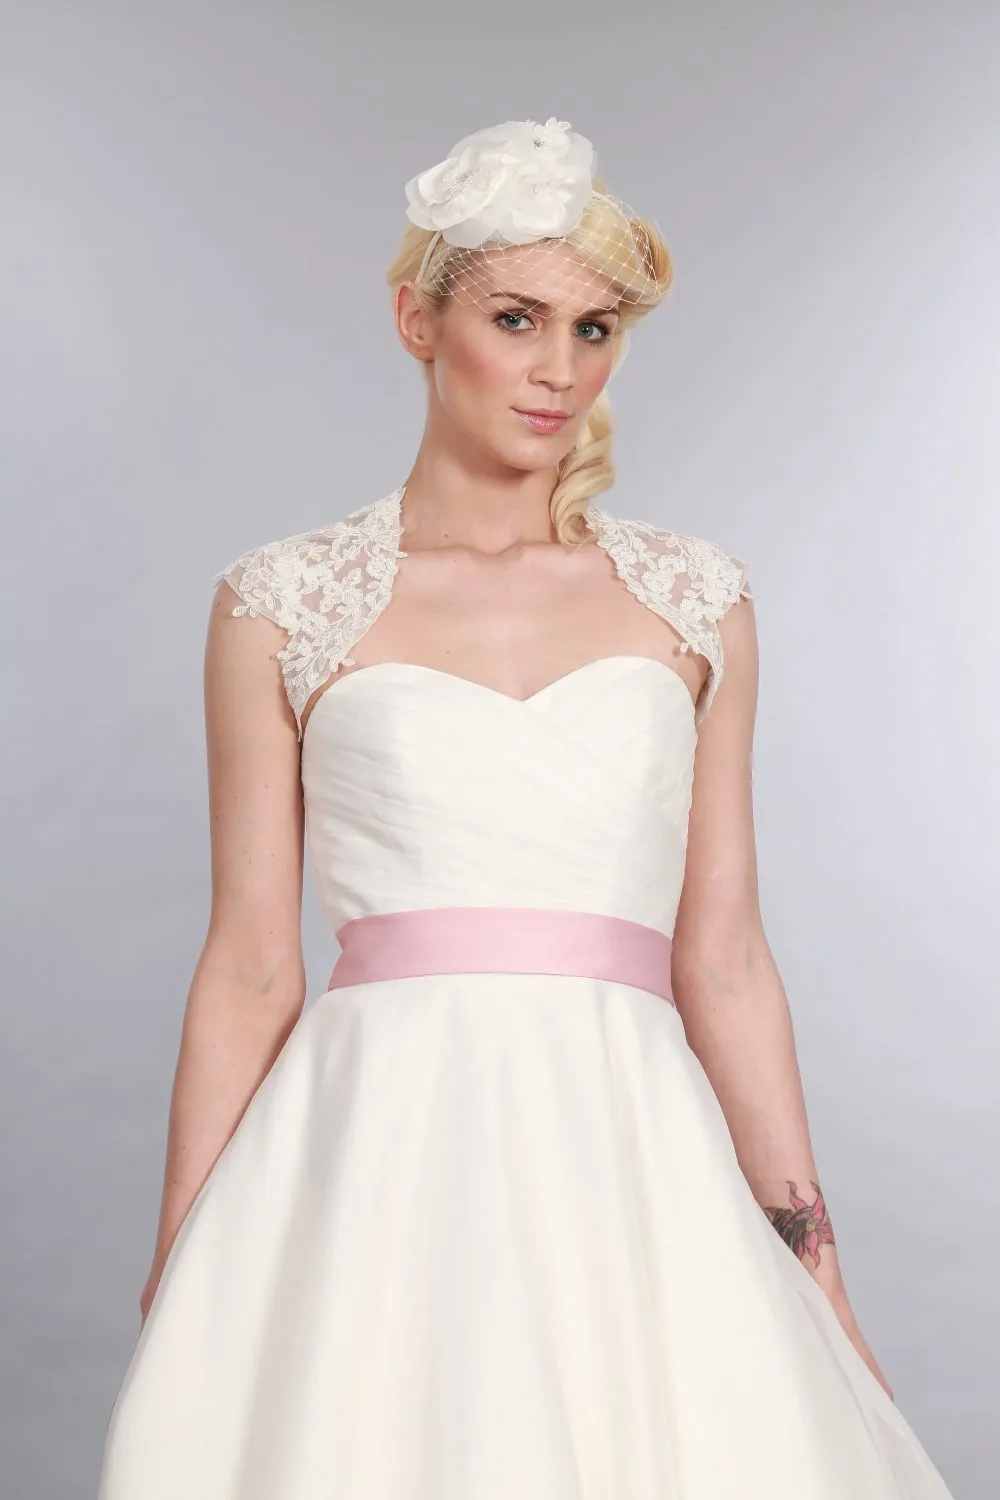 Calf Length 1950s Short Wedding Dresses Sweetheart Pleats Bodice Vintage Tea Length 1960s Informal Bridal Gowns Custom Made High Quality